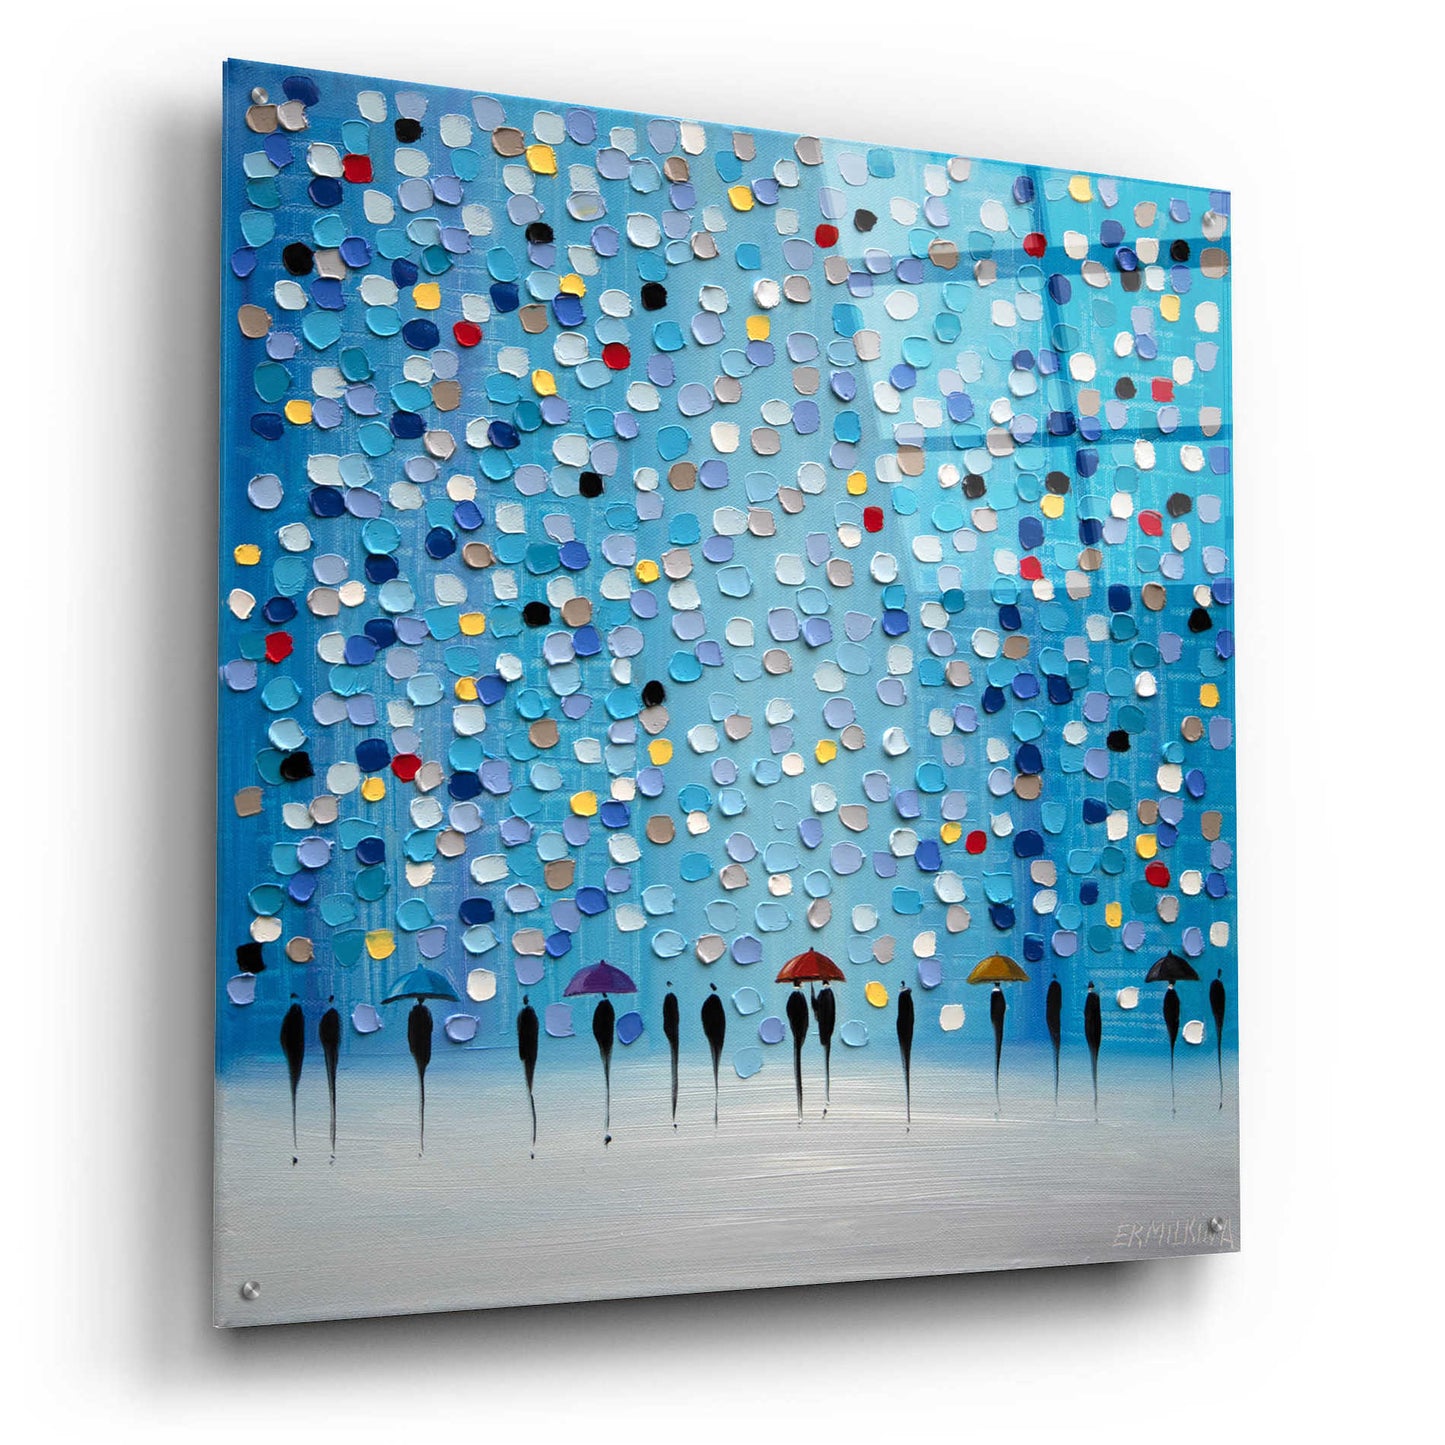 Epic Art 'Colorful City Umbrellas' by Ekaterina Ermilkina Acrylic Glass Wall Art,36x36